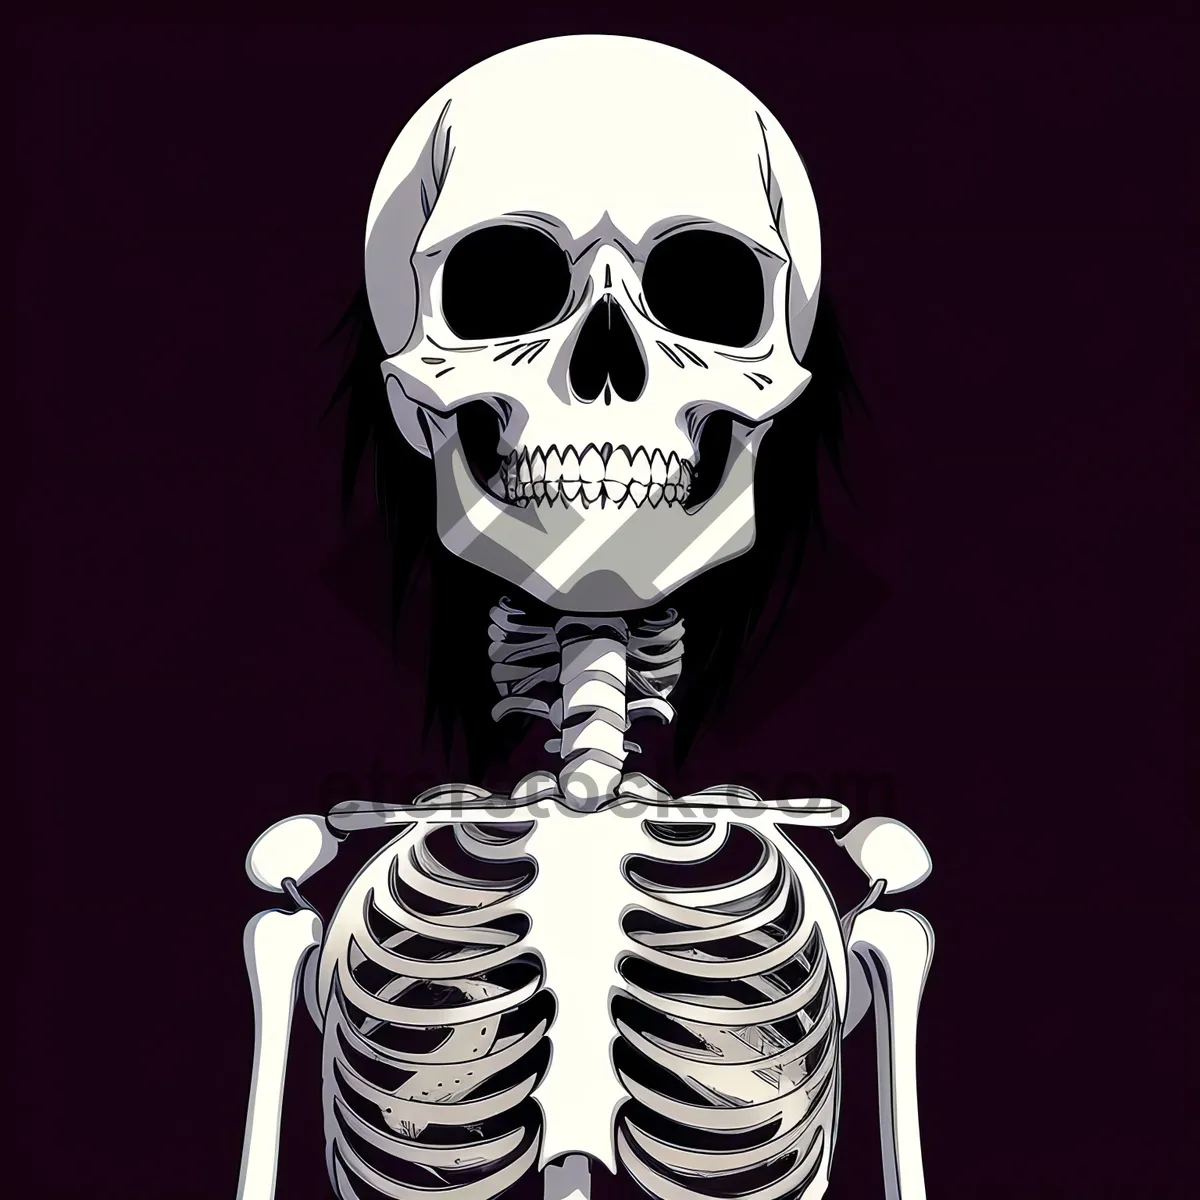 Picture of Spooky Pirate Skull Sculpture: A Bone-chilling Black Art Masterpiece